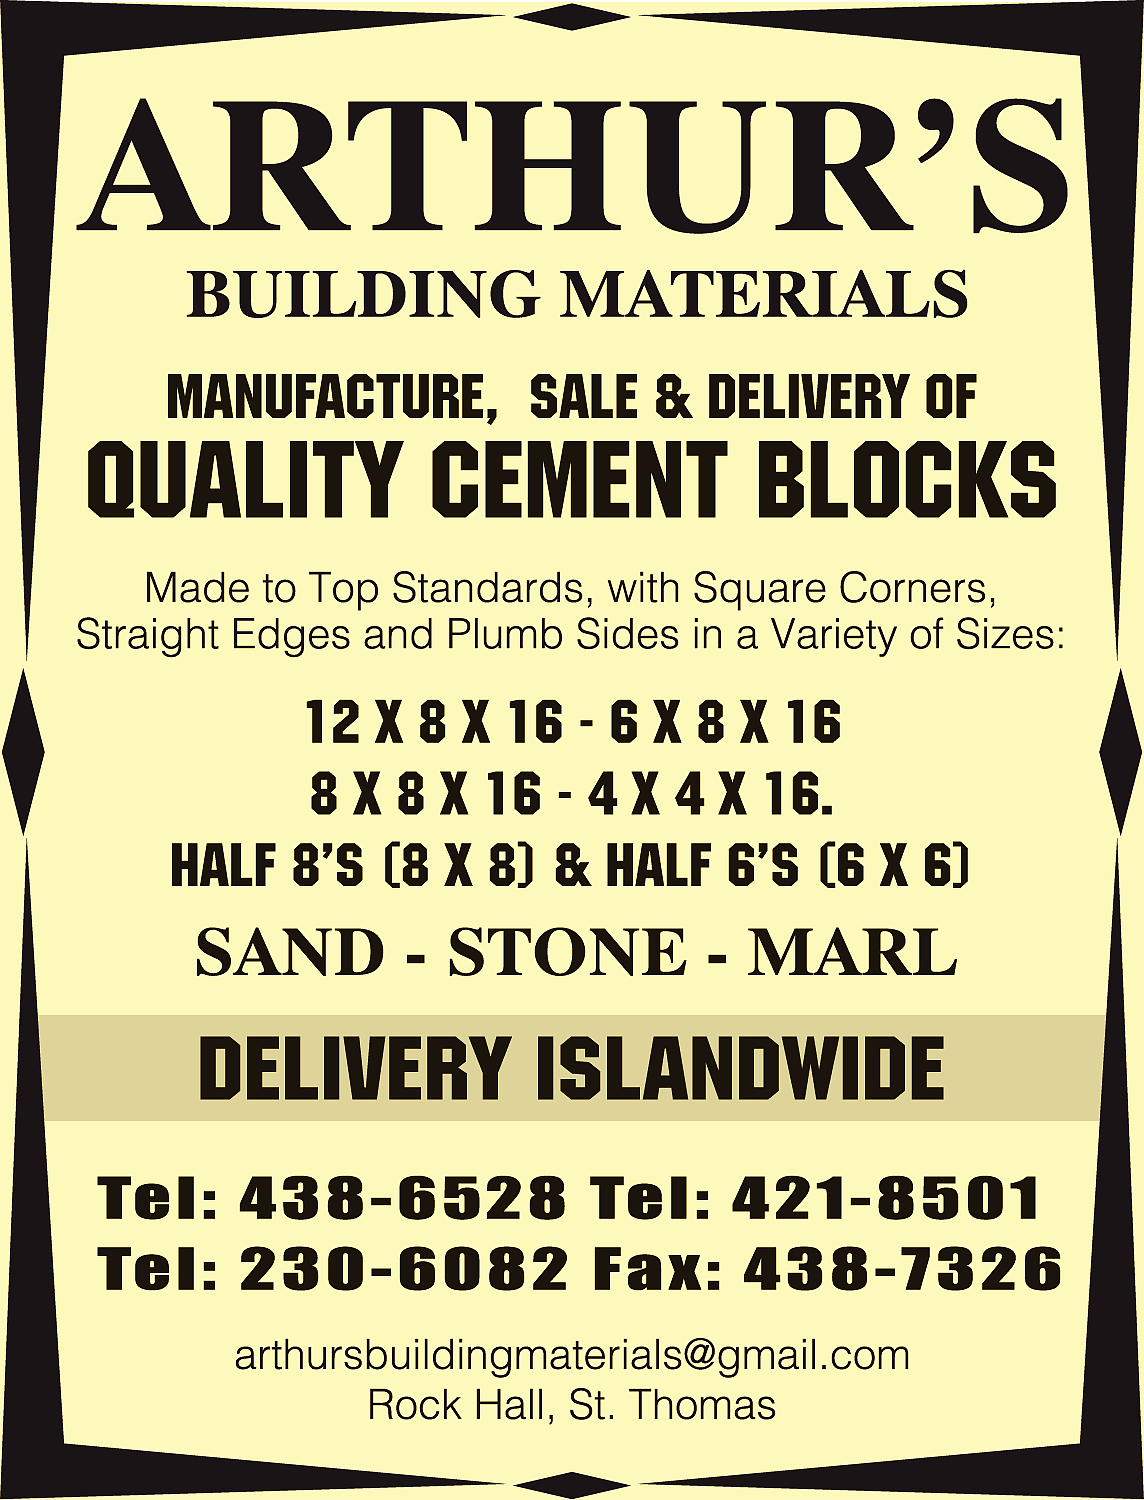 Arthur's Building Materials - Builders Supplies